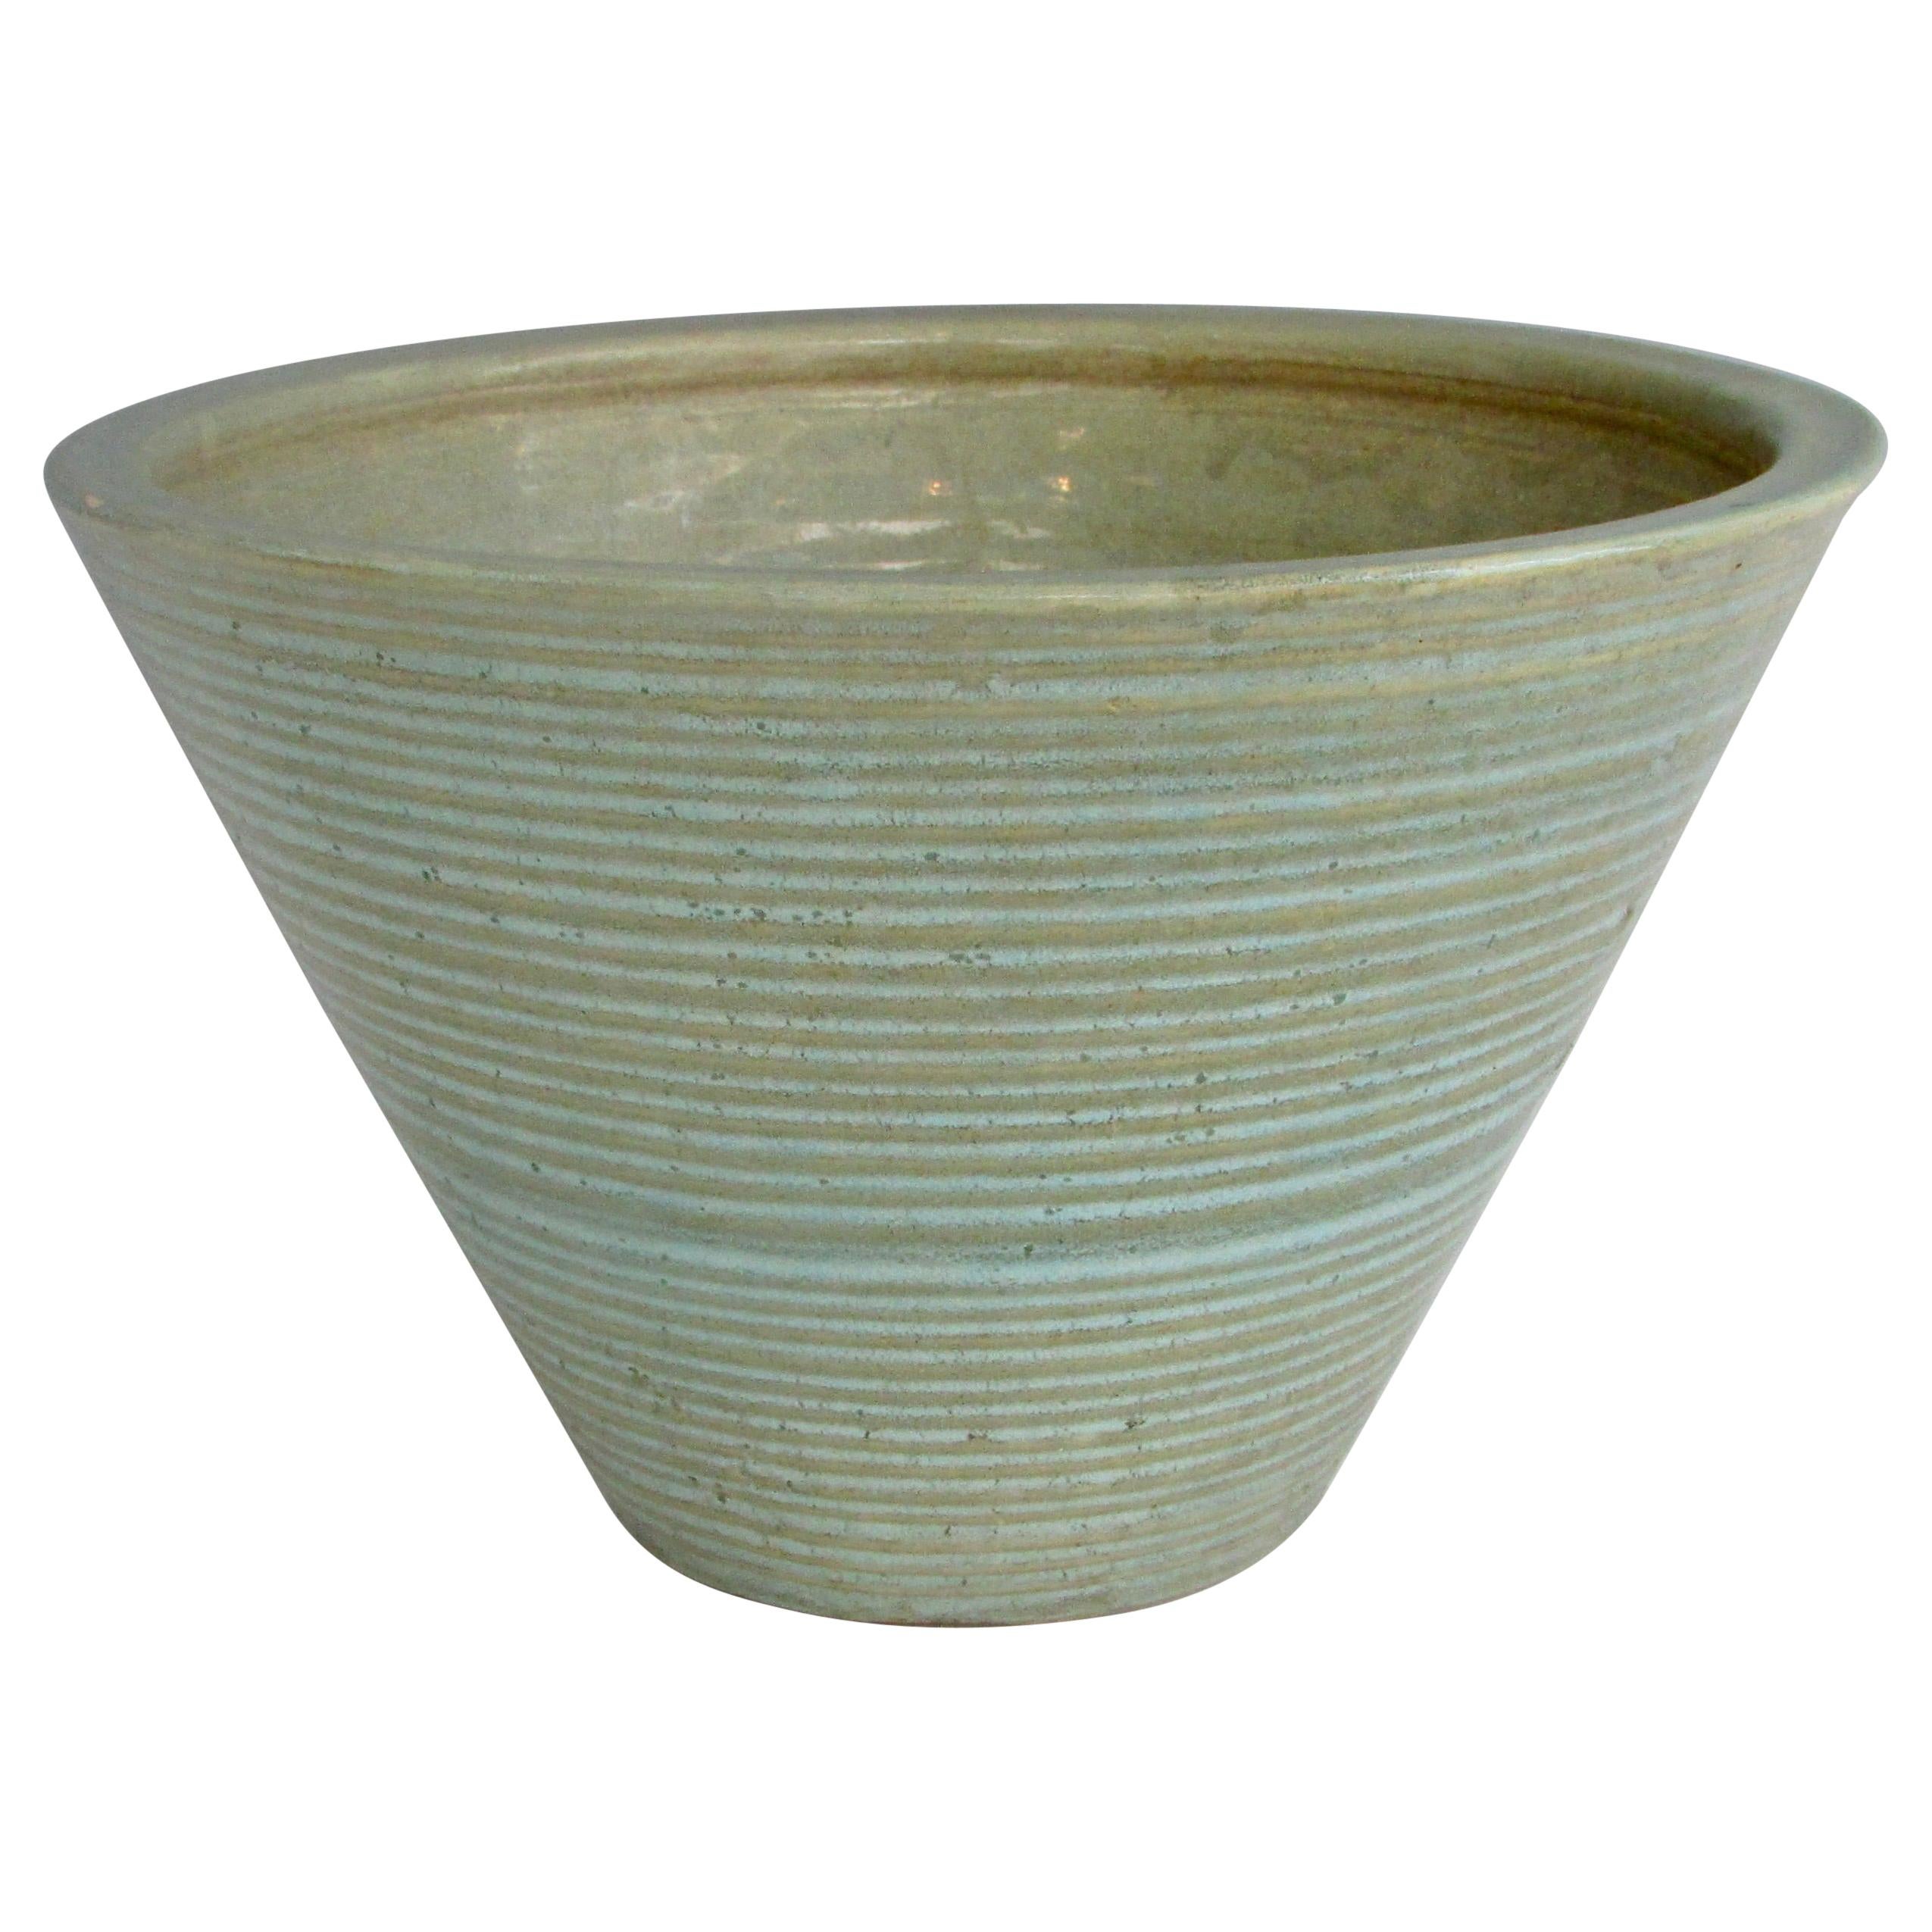 Zanesville Stoneage Modern Stoneware Large Vase 4012 Mid Century Architectural Pottery